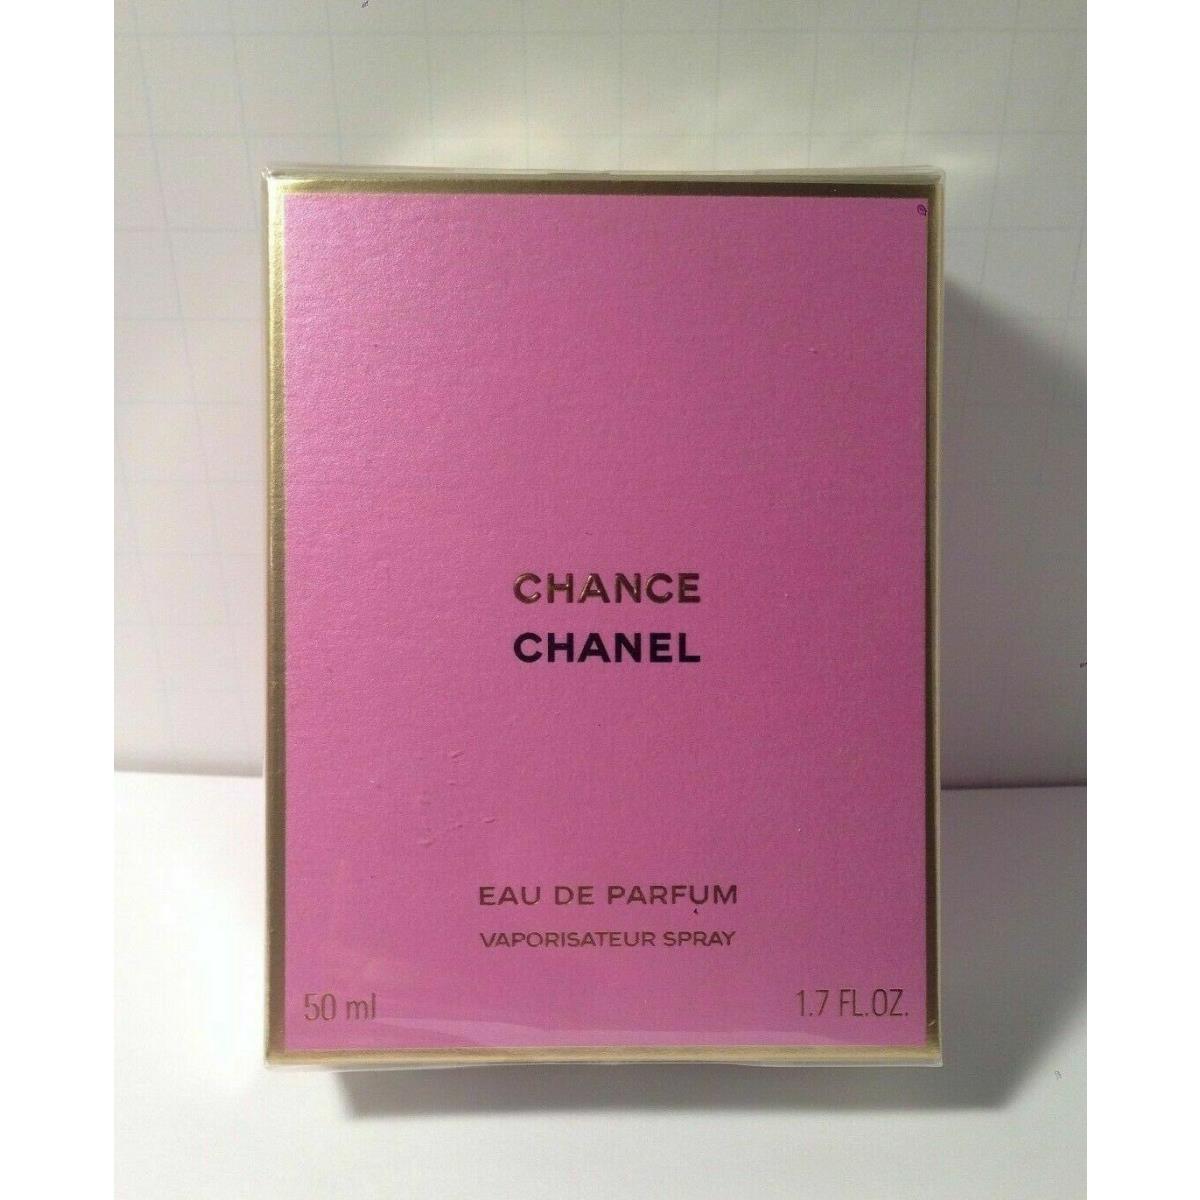 Chanel Chance Eau de Parfum Spray 1.7oz in Retail Box